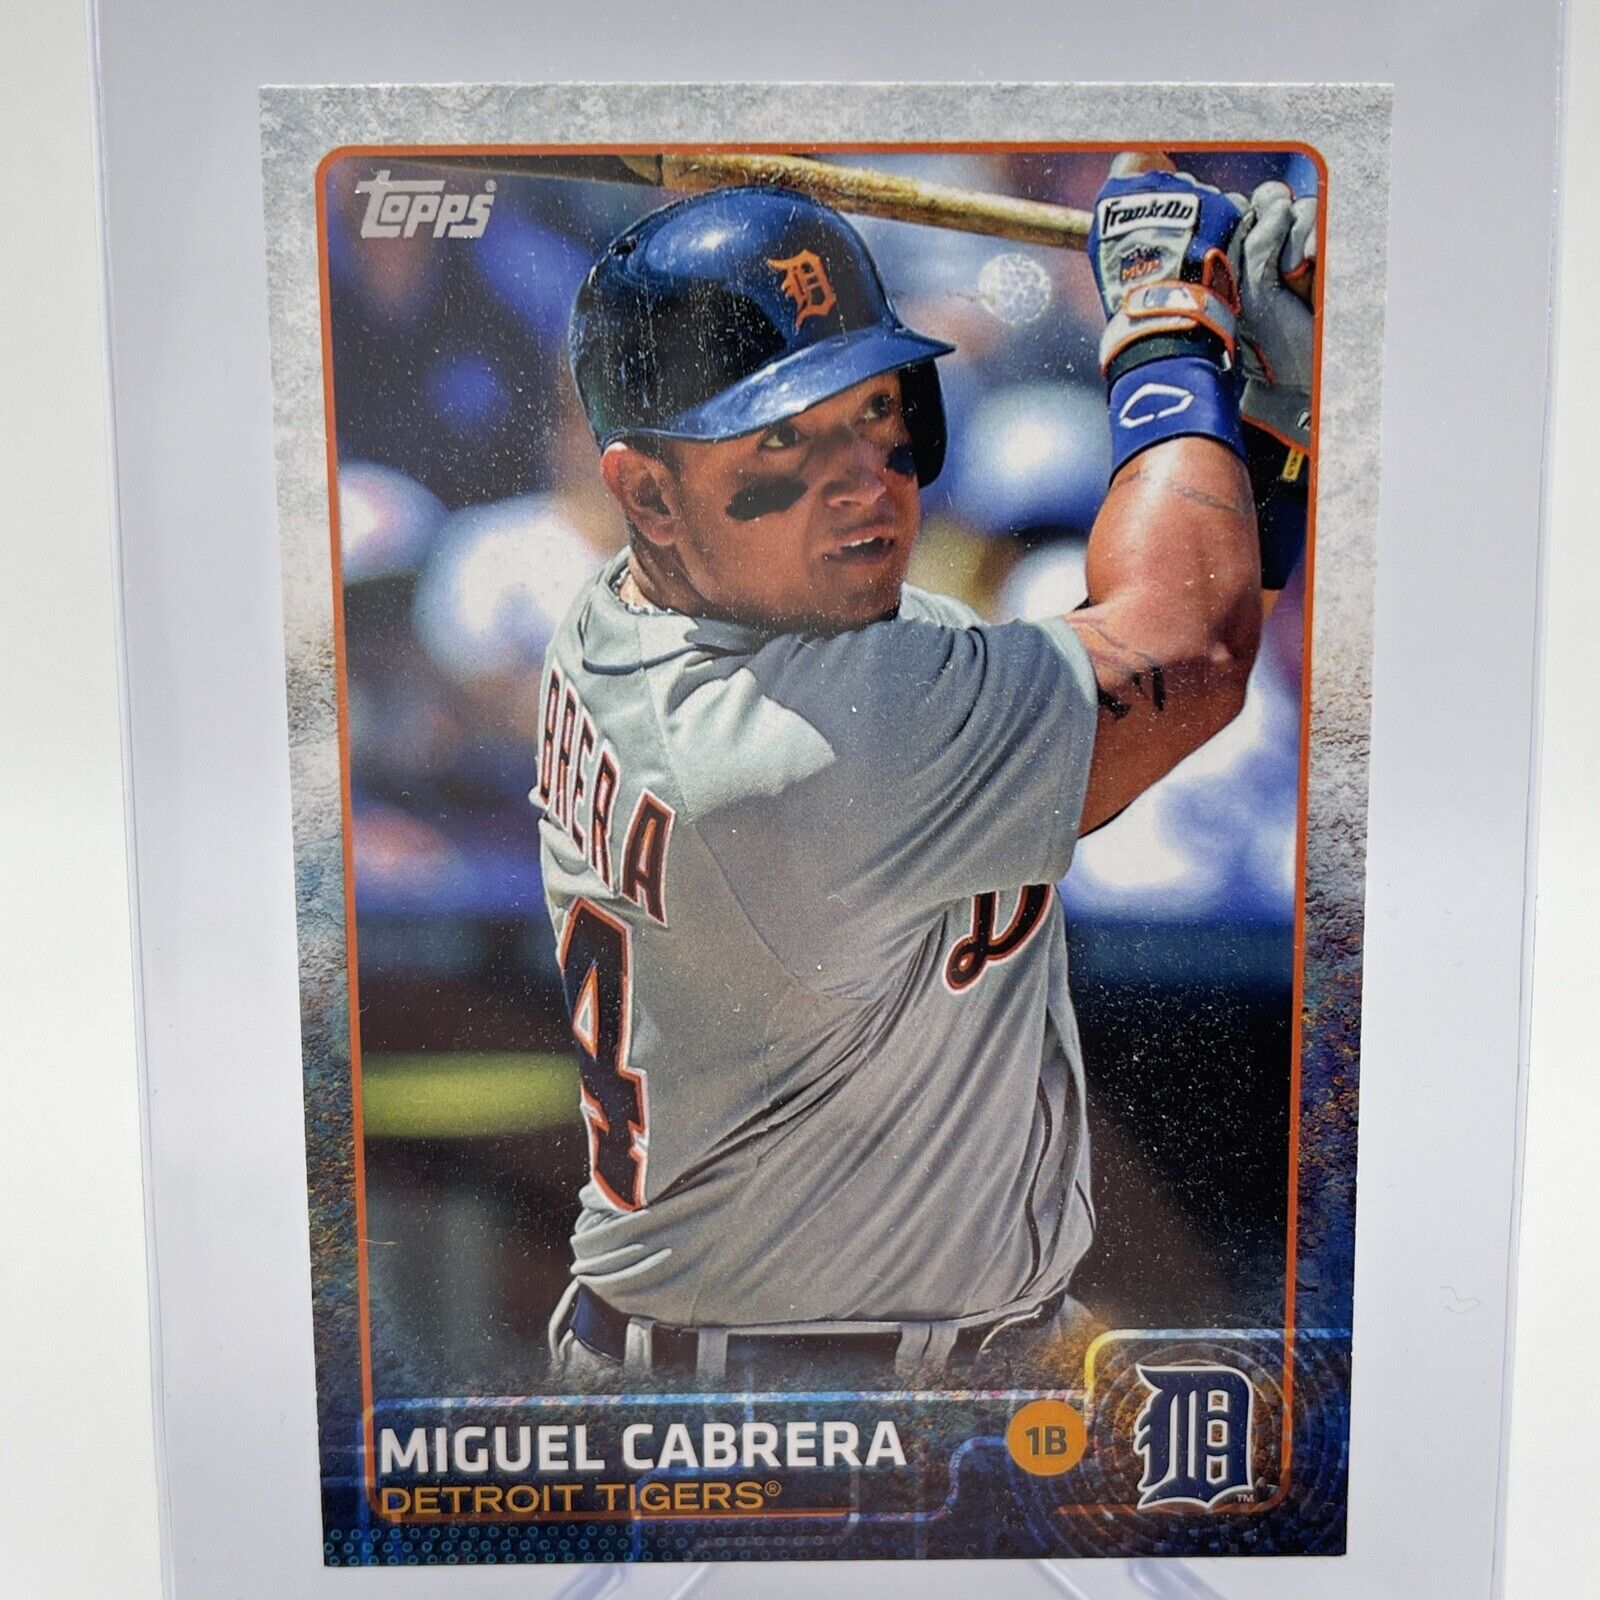 2015 Topps Miguel Cabrera Baseball Card #200 Mint 